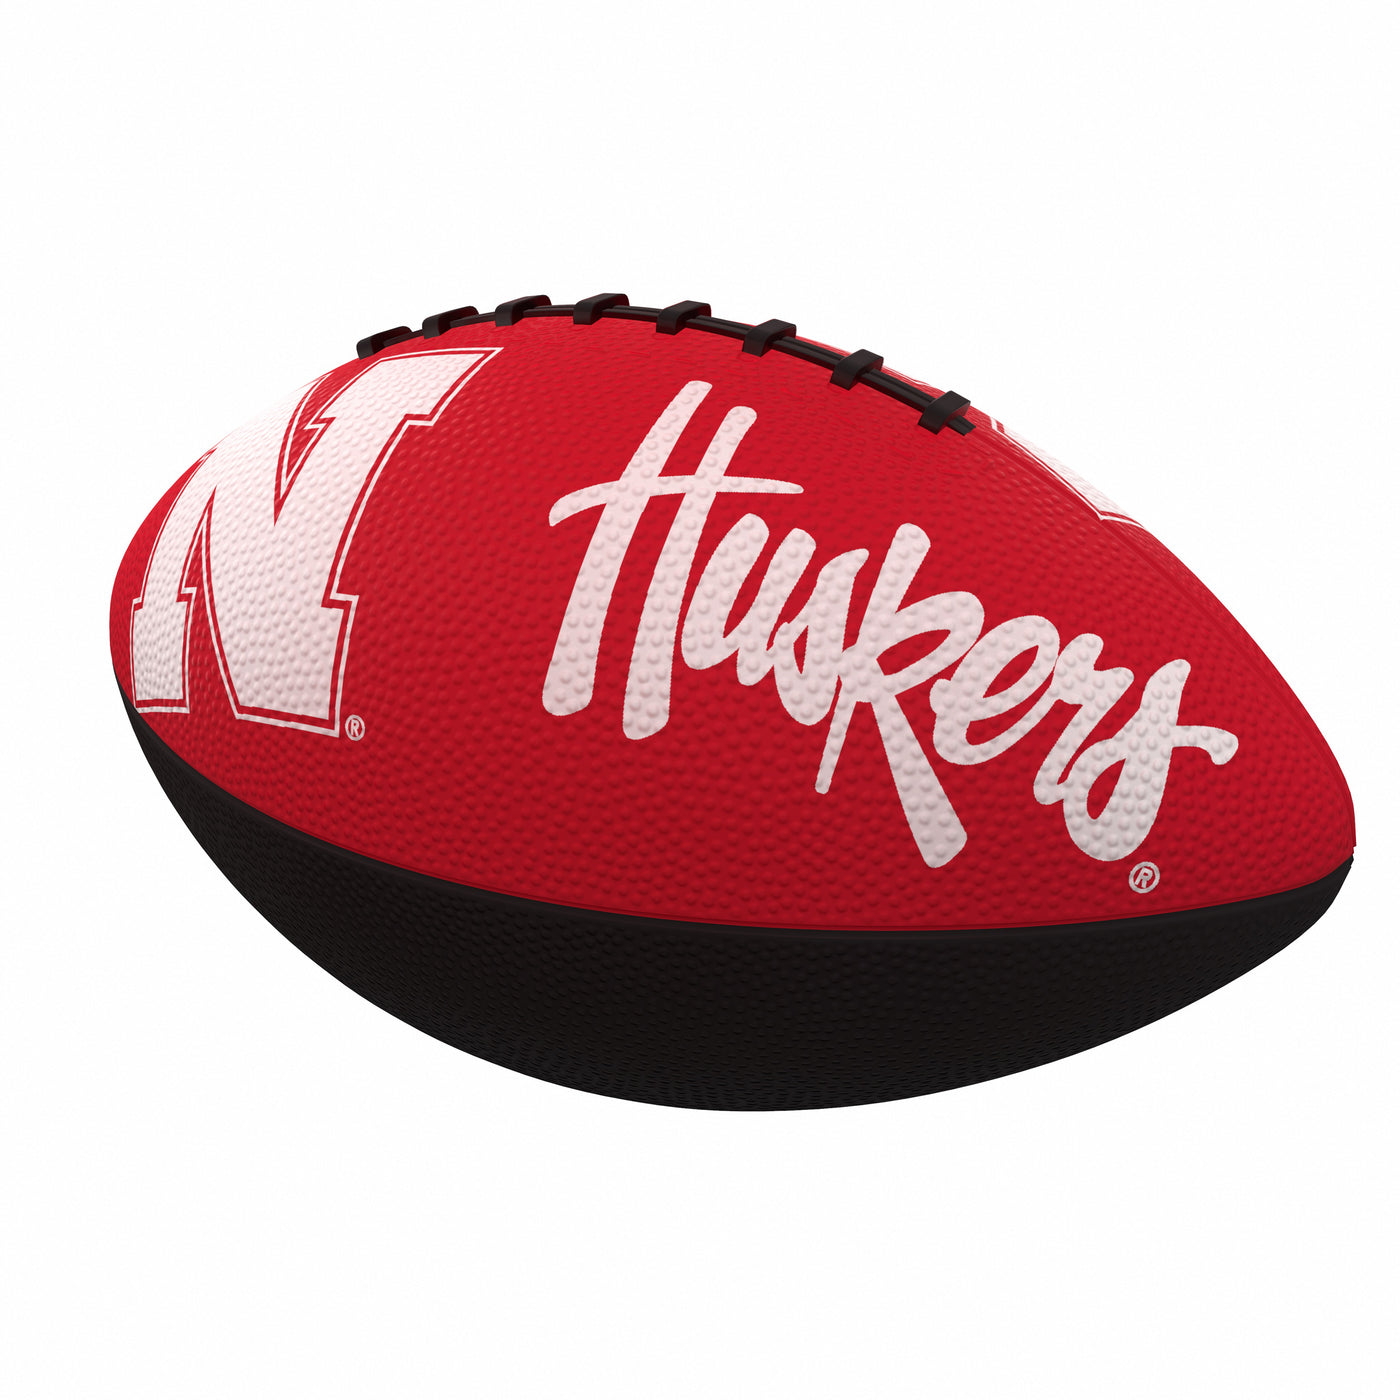 Nebraska Combo Logo Junior-Size Rubber Football